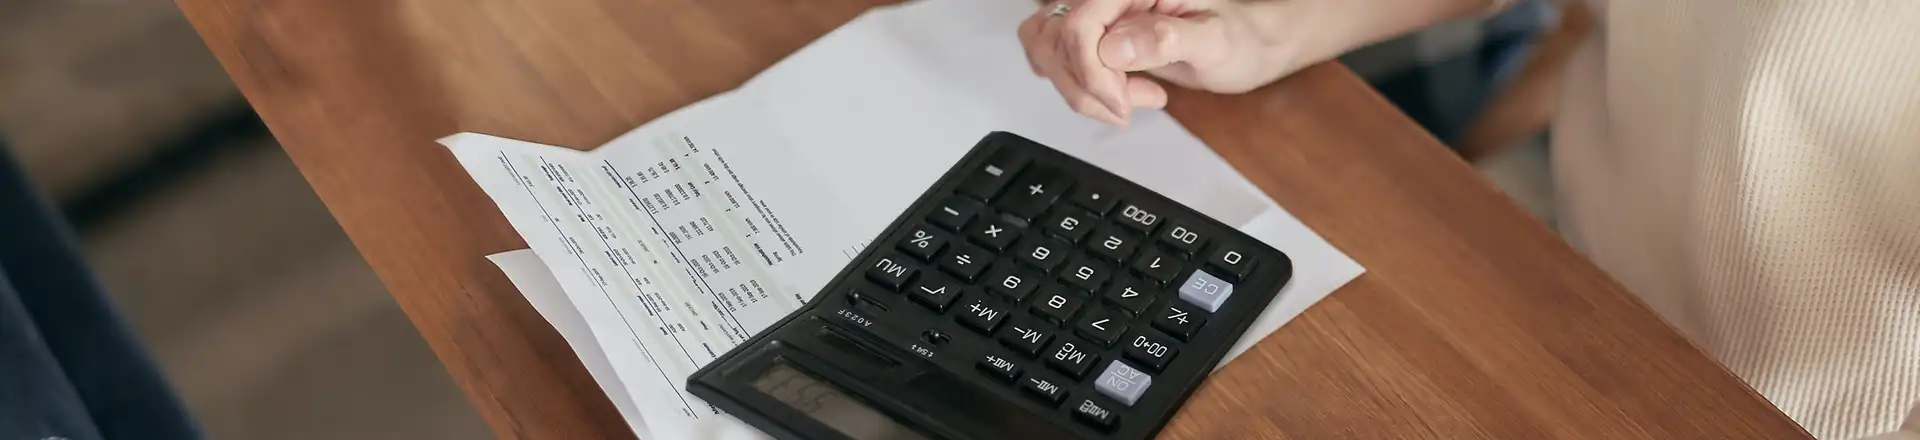 calculator sitting on top of bill